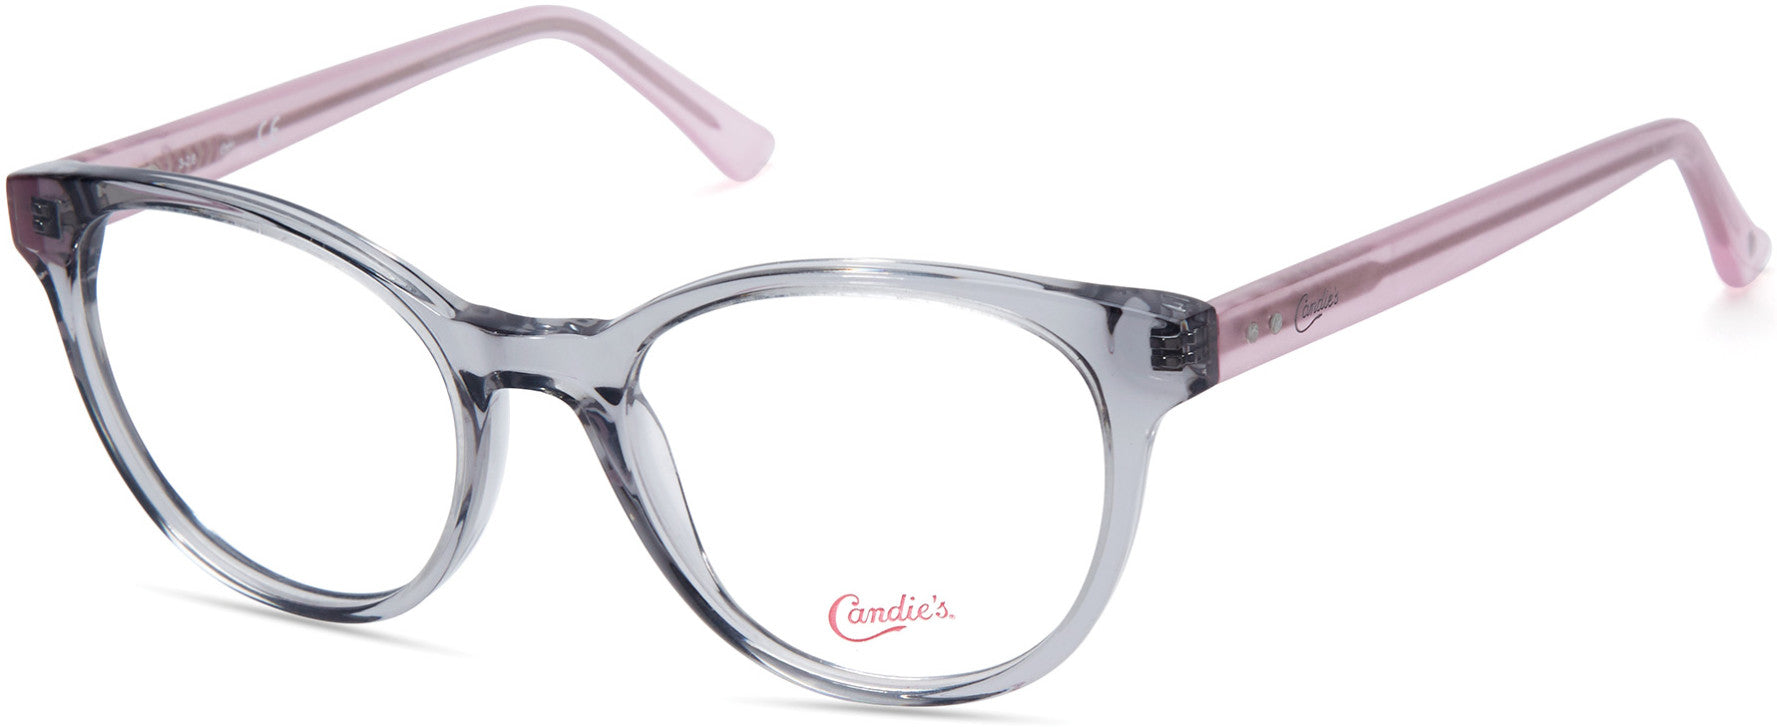 Candies CA0177 Round Eyeglasses 020-020 - Grey